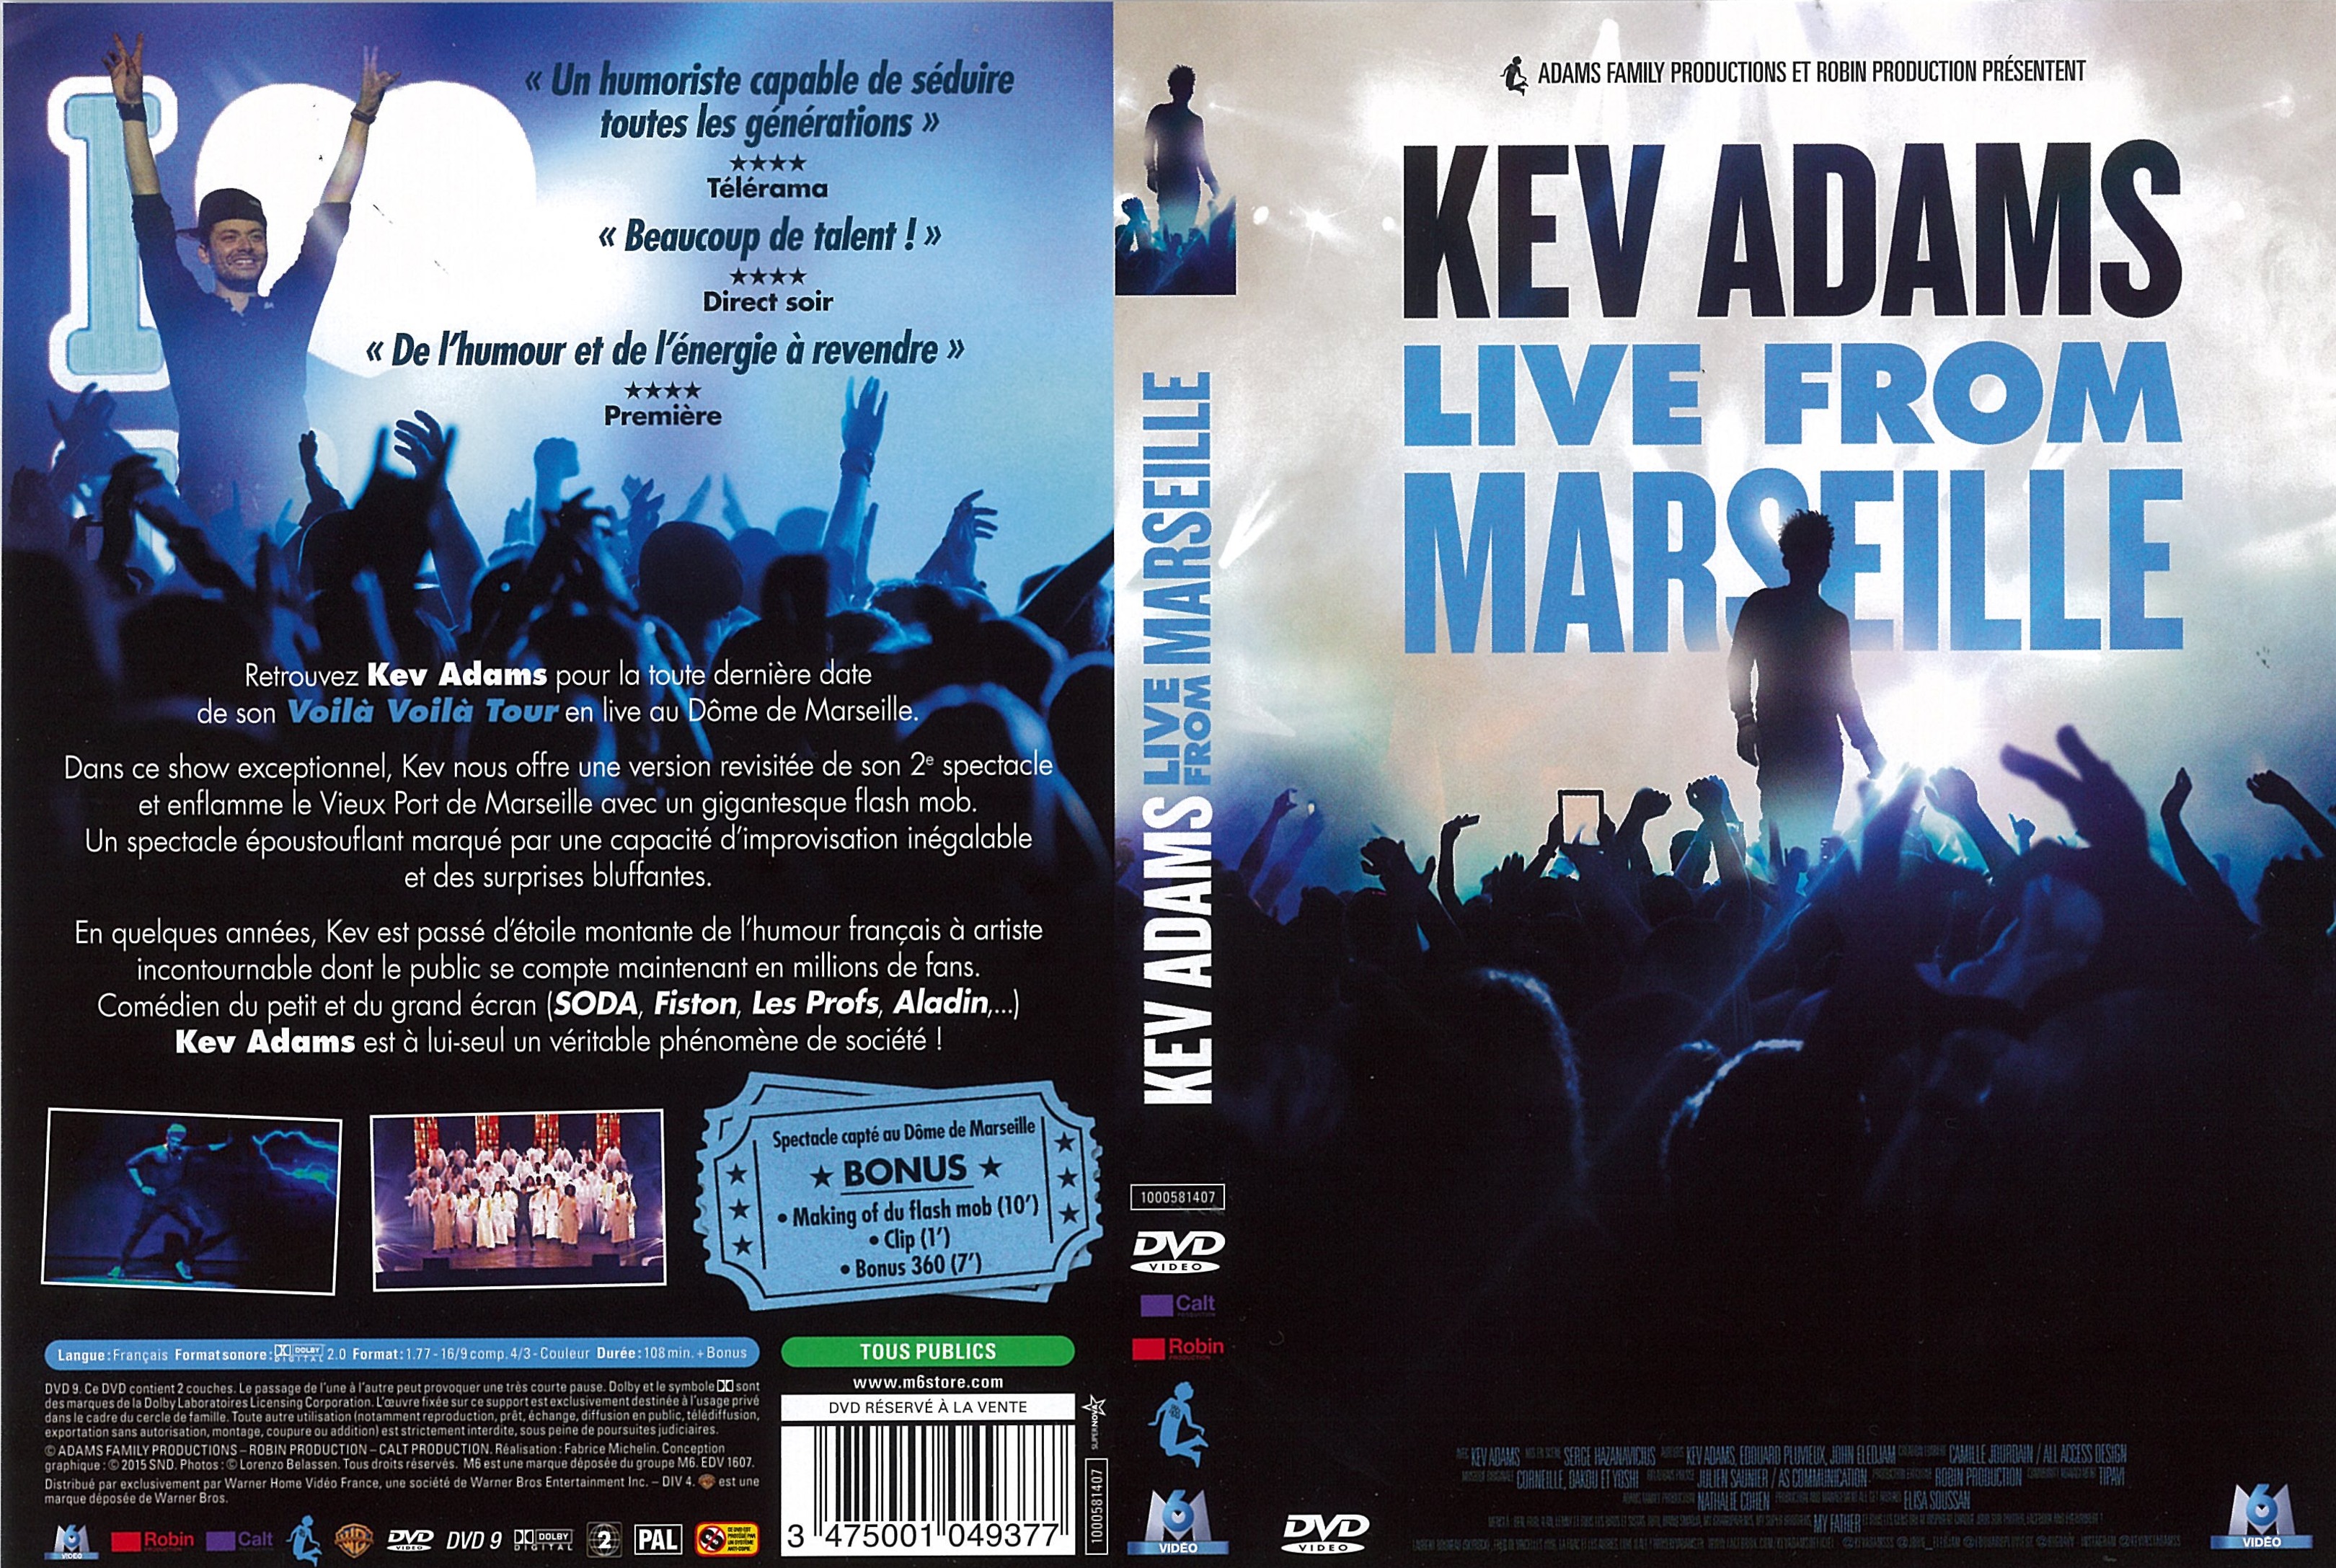 Jaquette DVD Kev Adams - Live from Marsseille